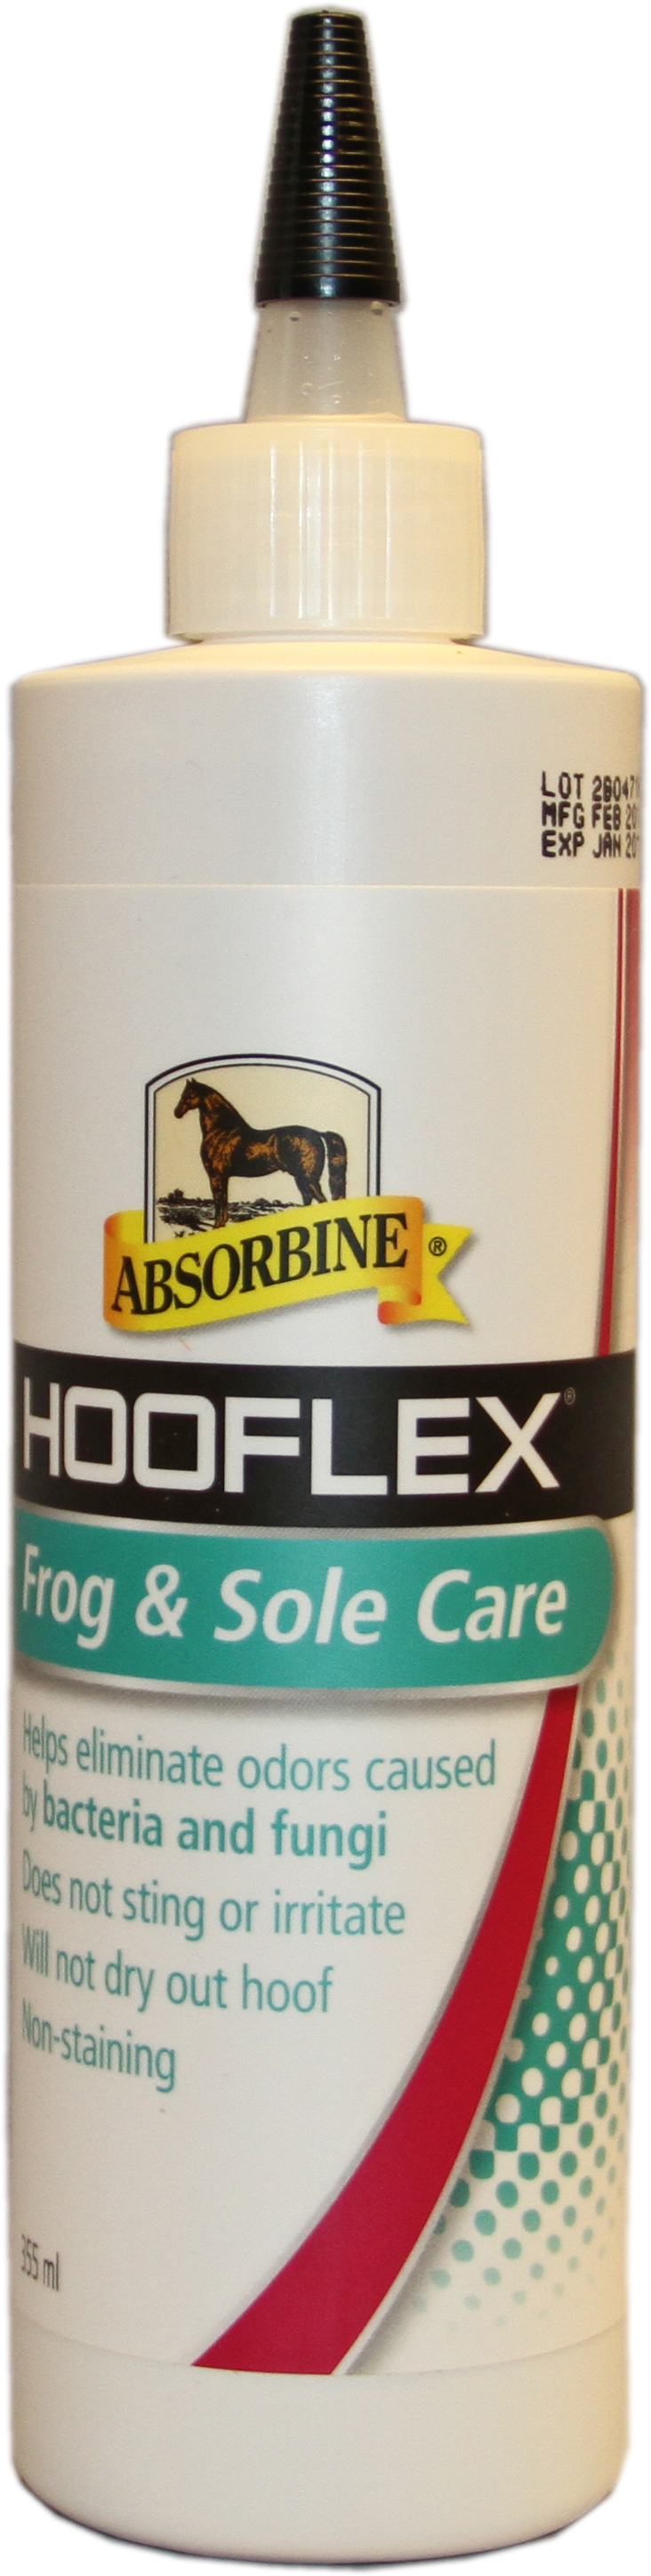 Hovvård Absorbine Hooflex Frog & sole care 355ml